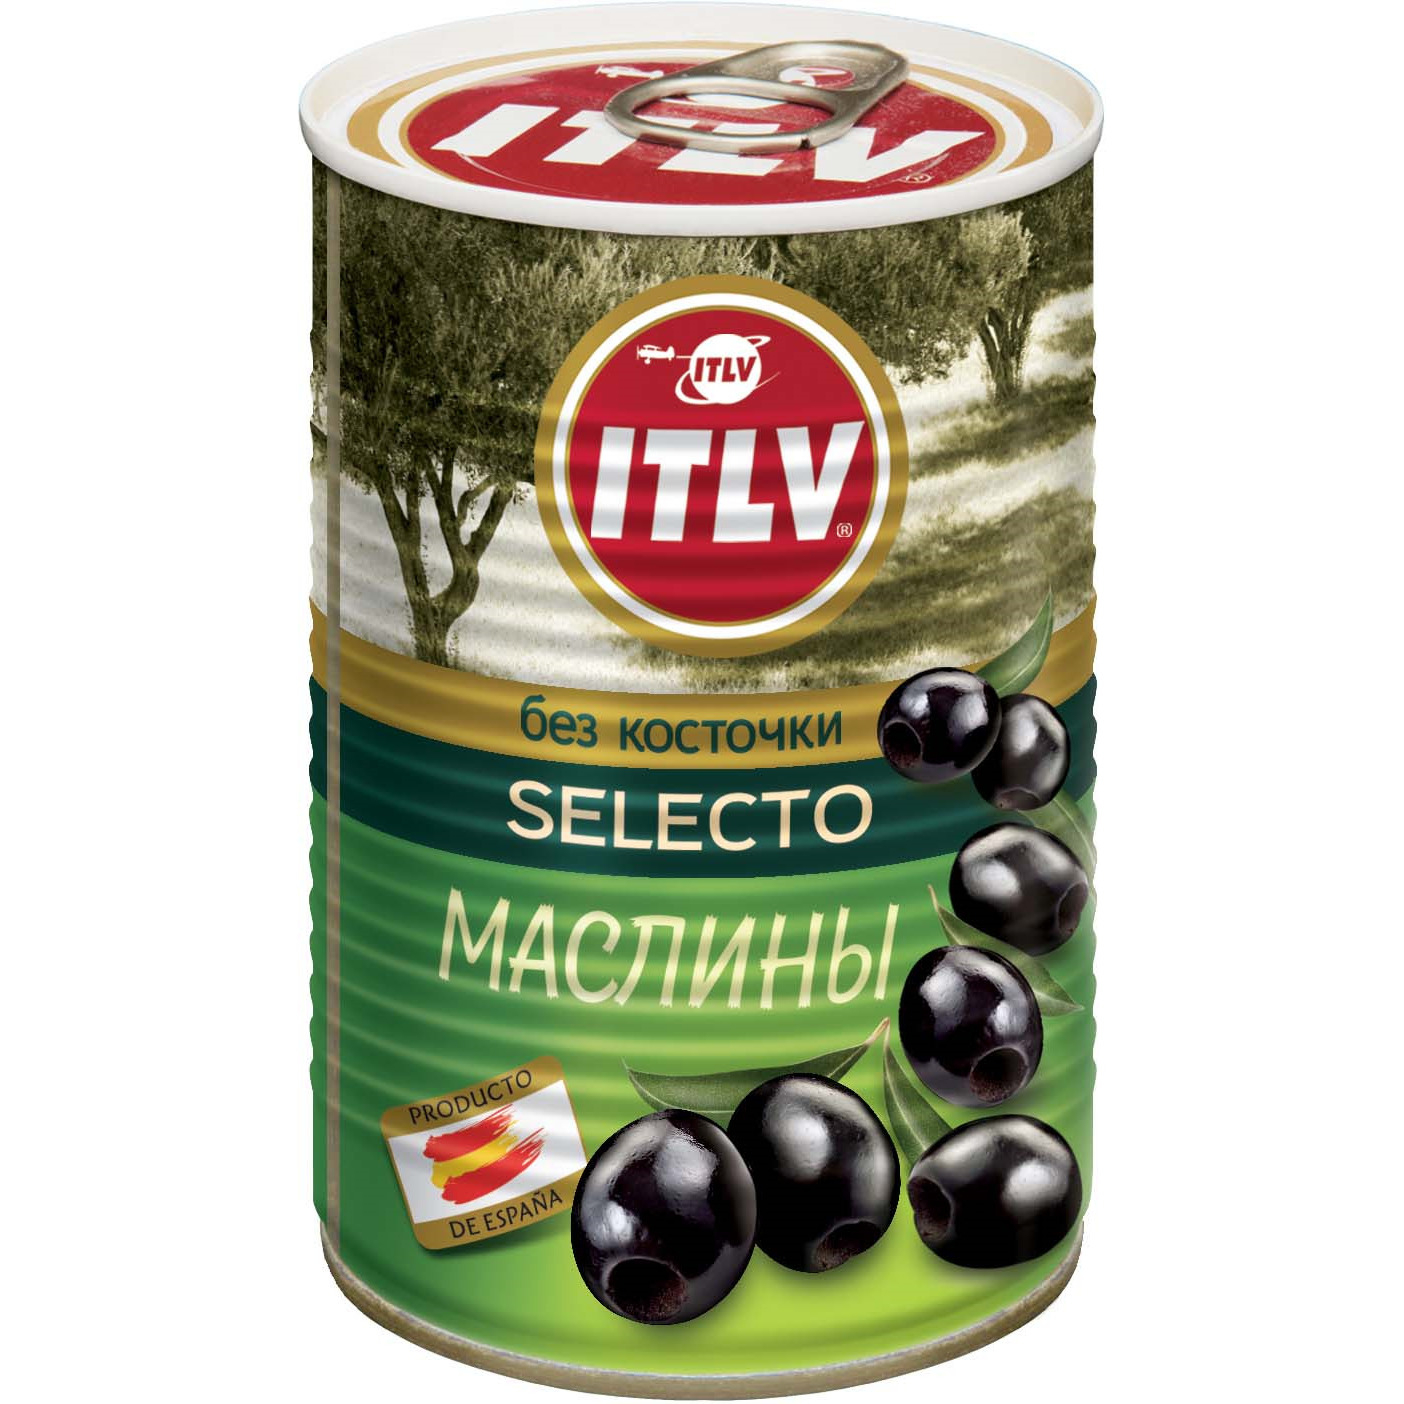 Маслины без косточки ITLV  Selecto, 425 мл маслины itlv резаные 314 мл